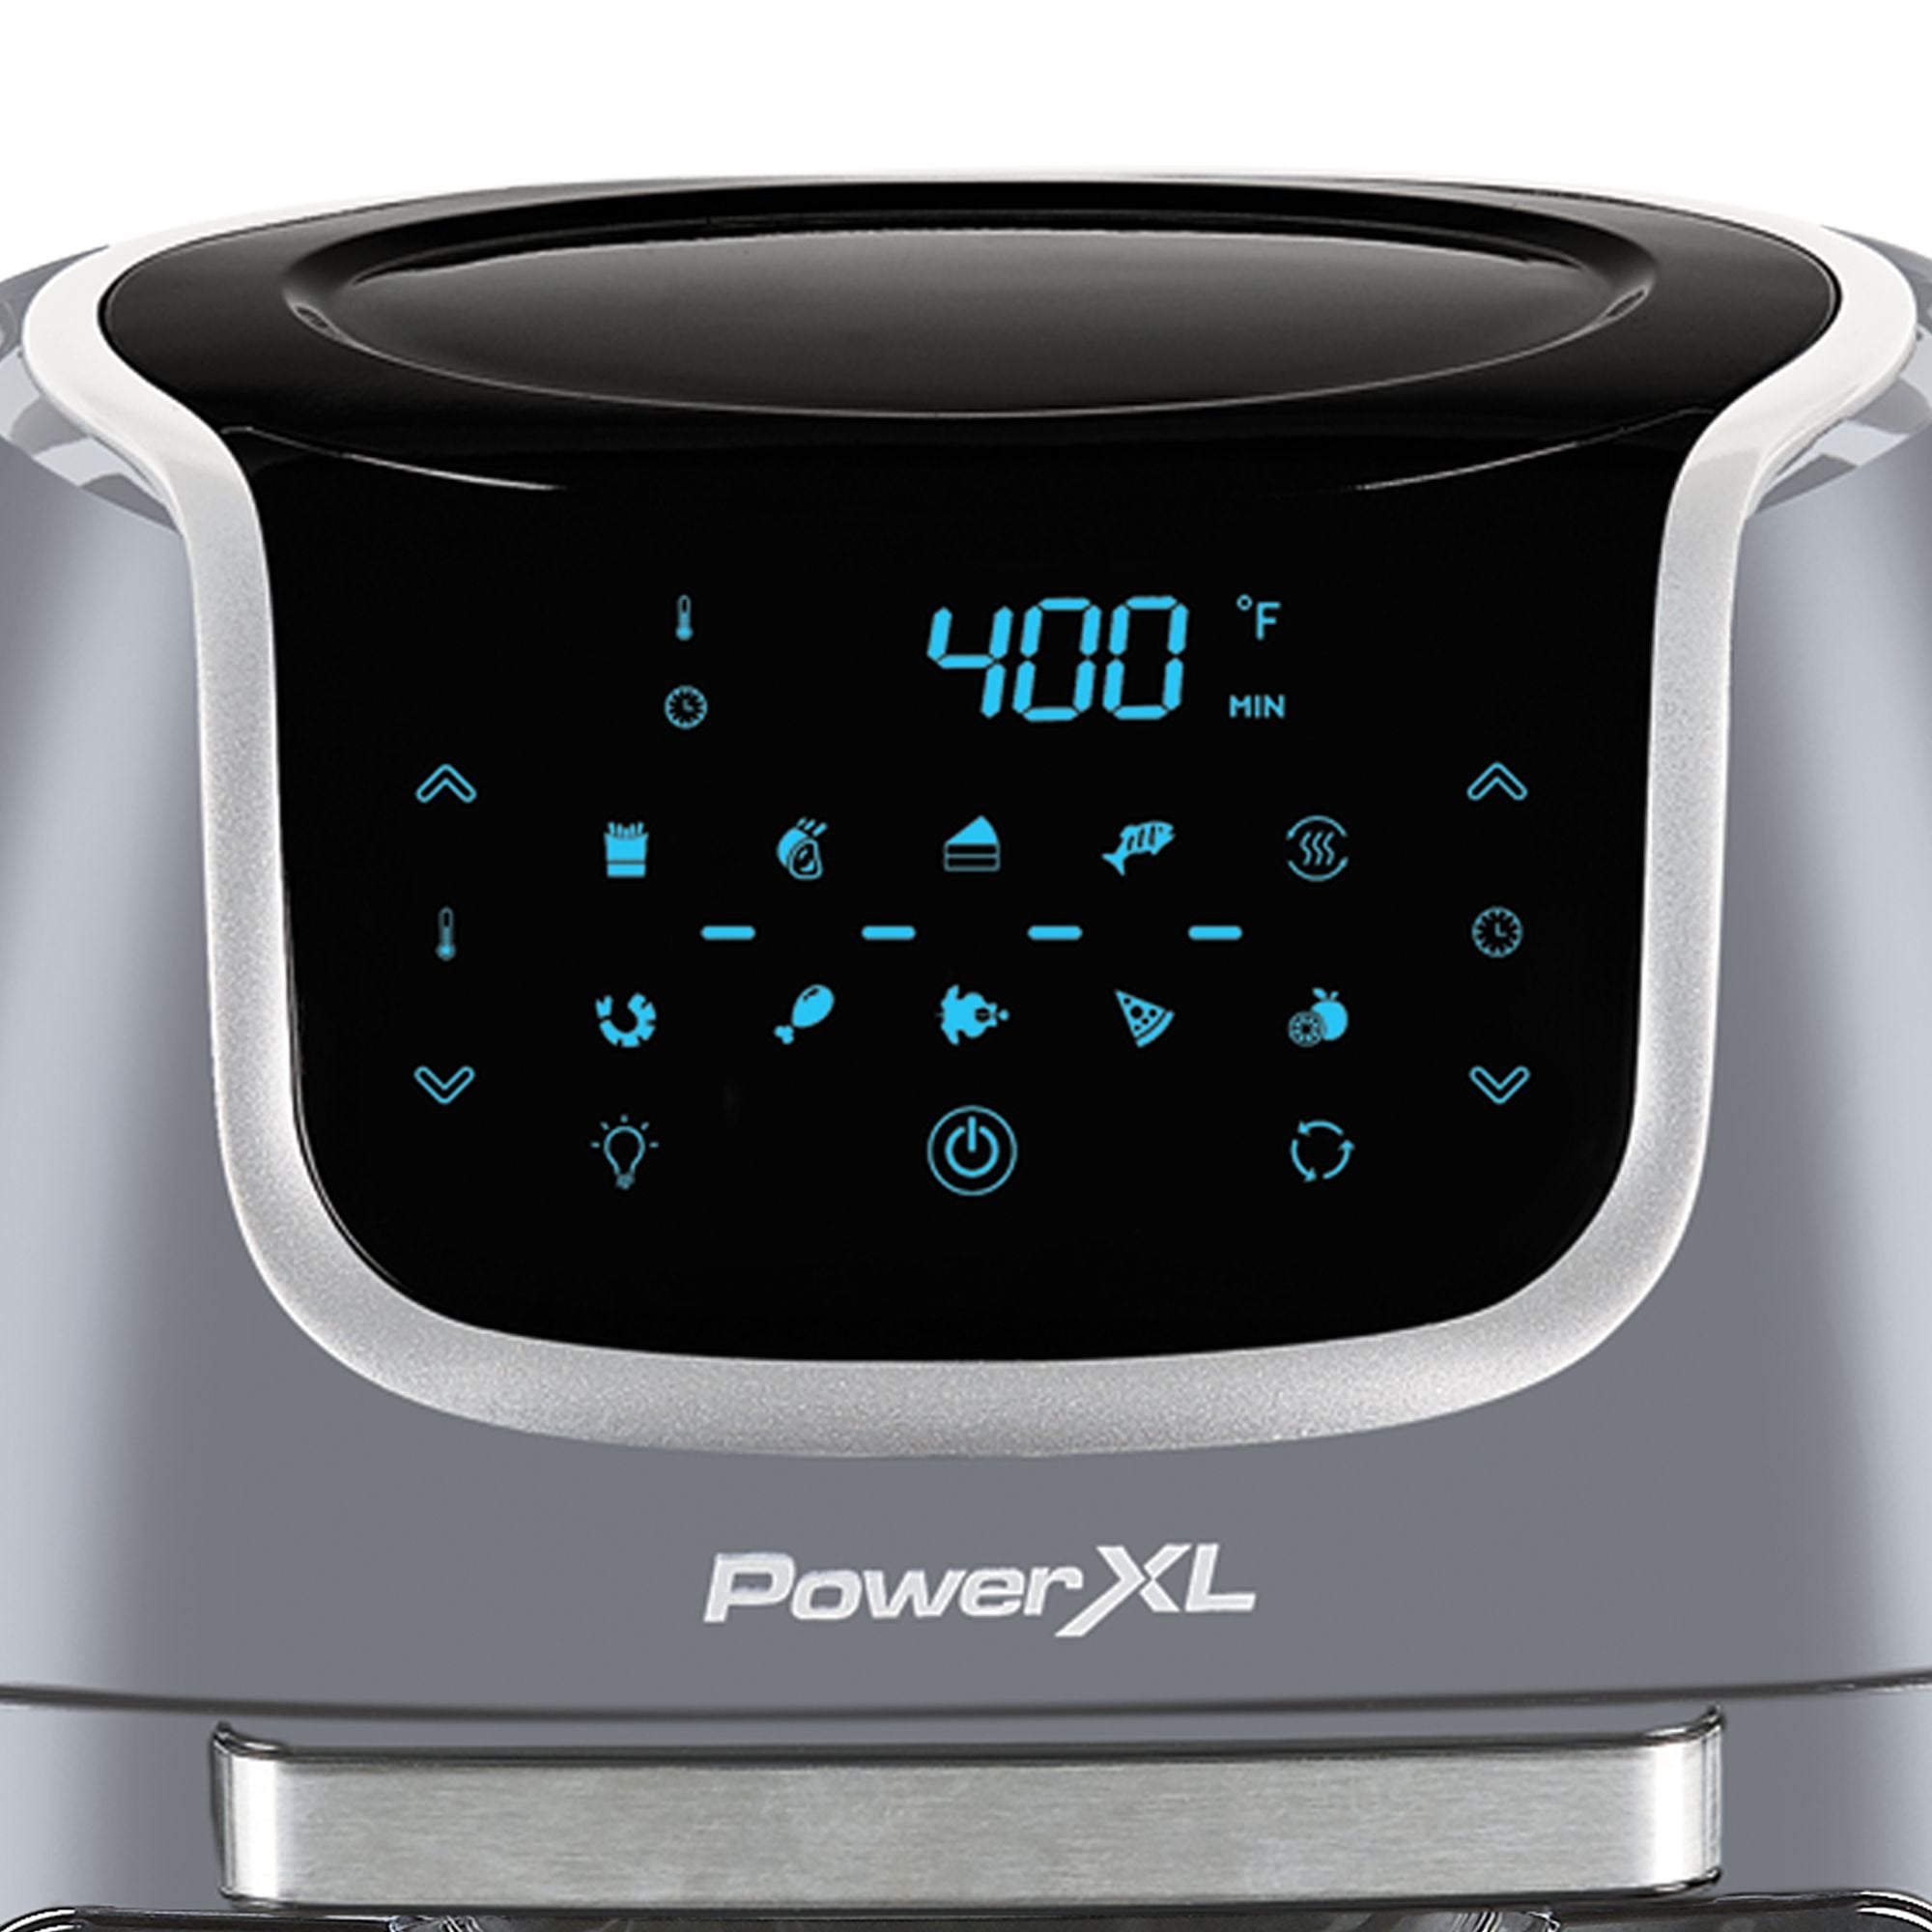 PowerXL Vortex Air Fryer Pro 10qt Black Digital Control Panel 10  Pre-programmed Settings in the Air Fryers department at